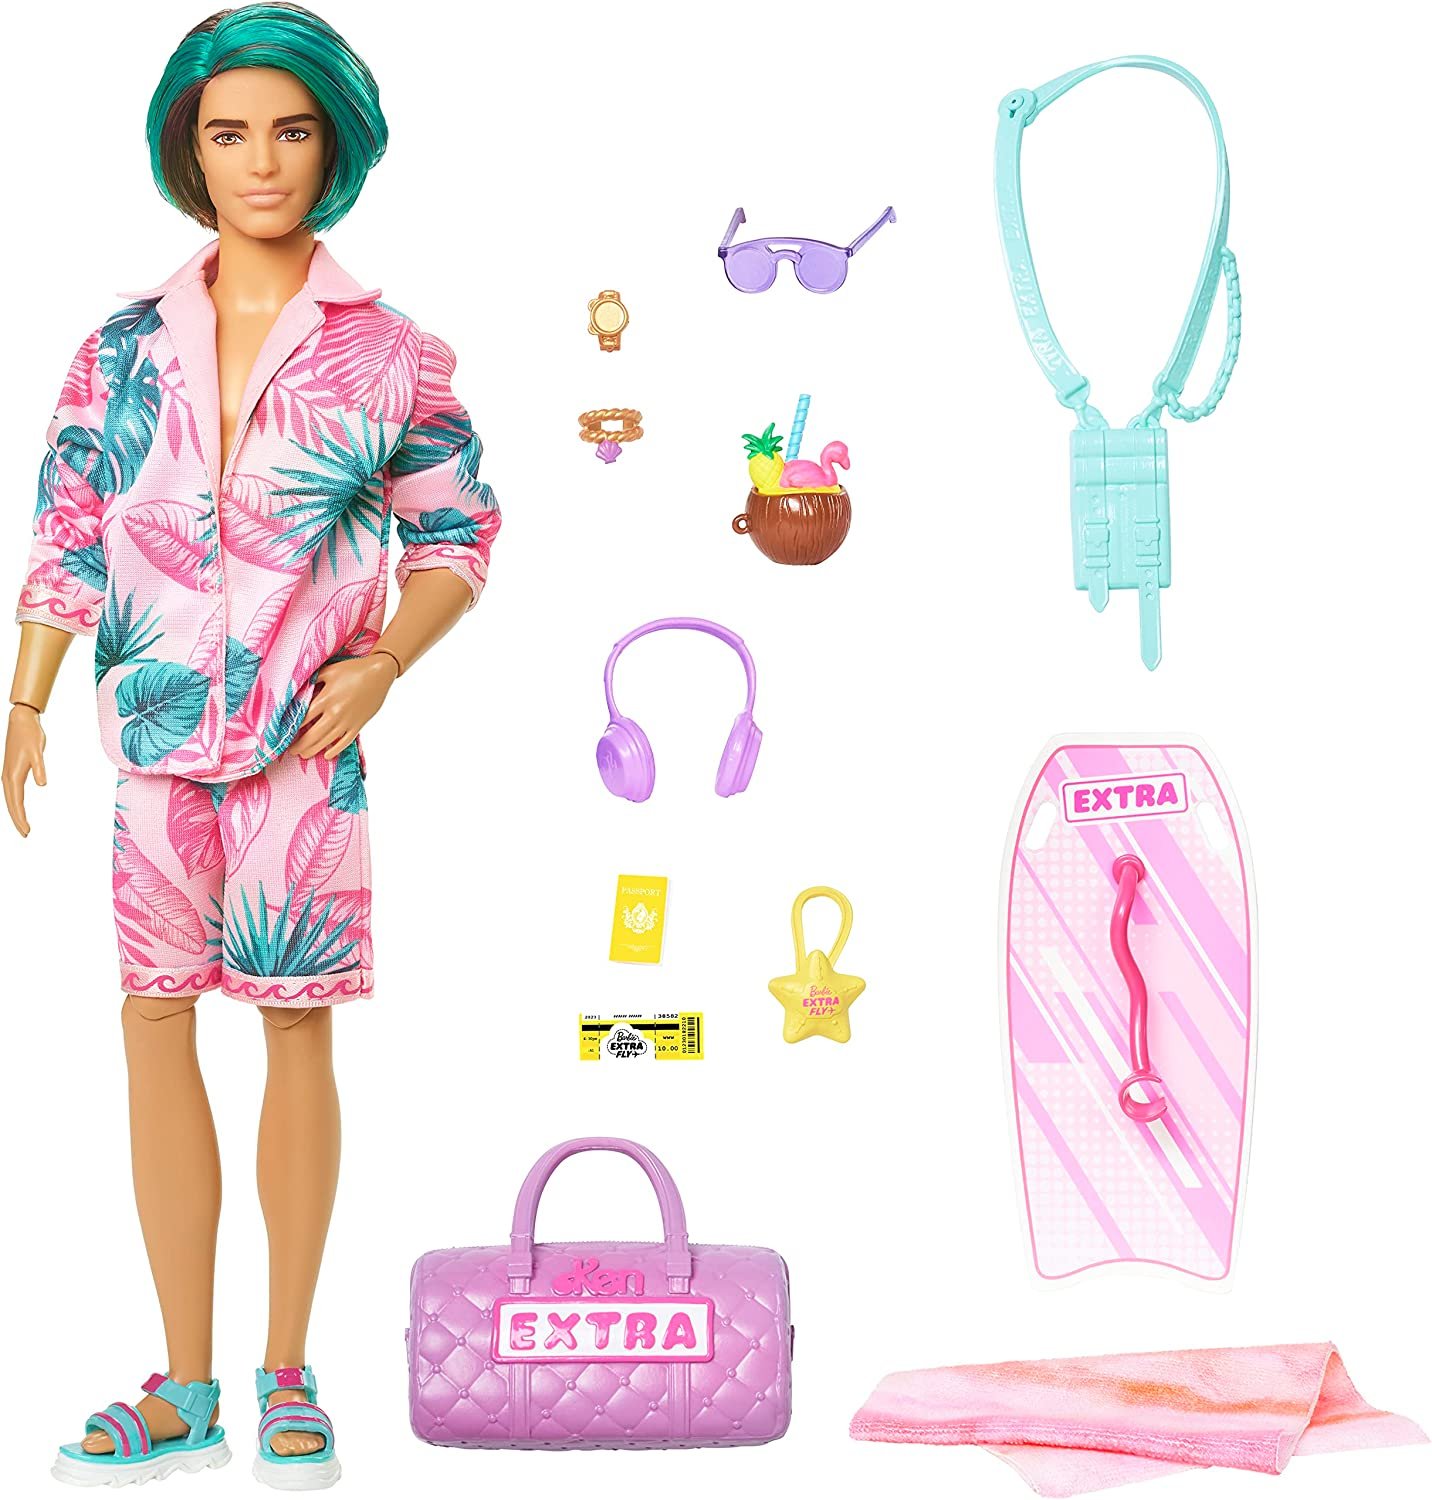 1682924236-youloveit-com-barbie-extra-fly-ken-beach-doll3